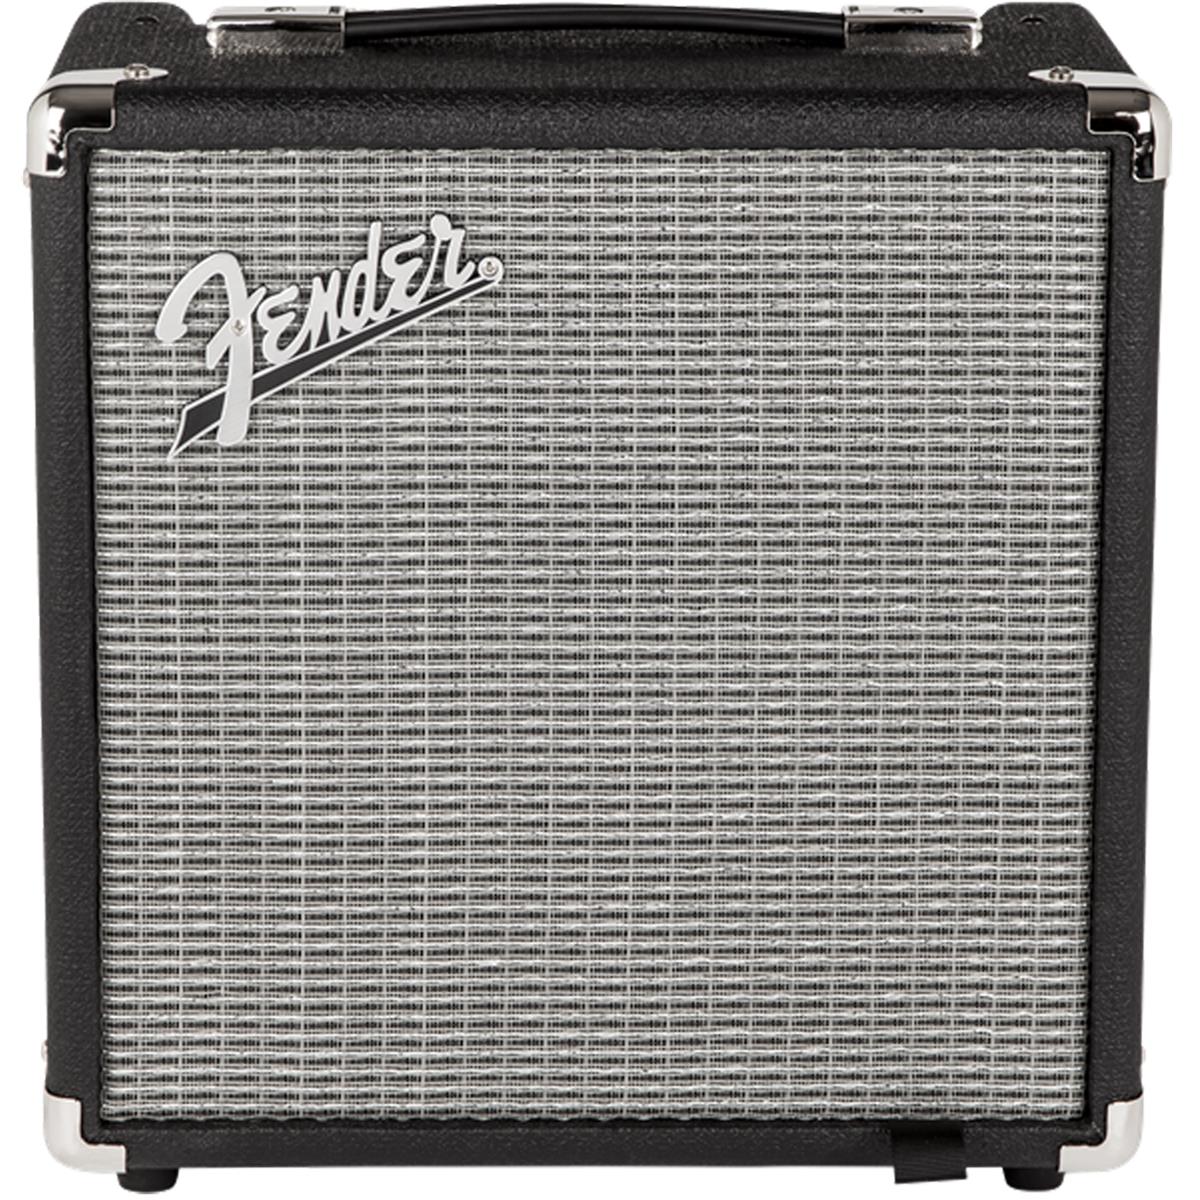 Fender Rumble 15 (V3) Bass Amplifier with 8" Speaker, Black/Silver